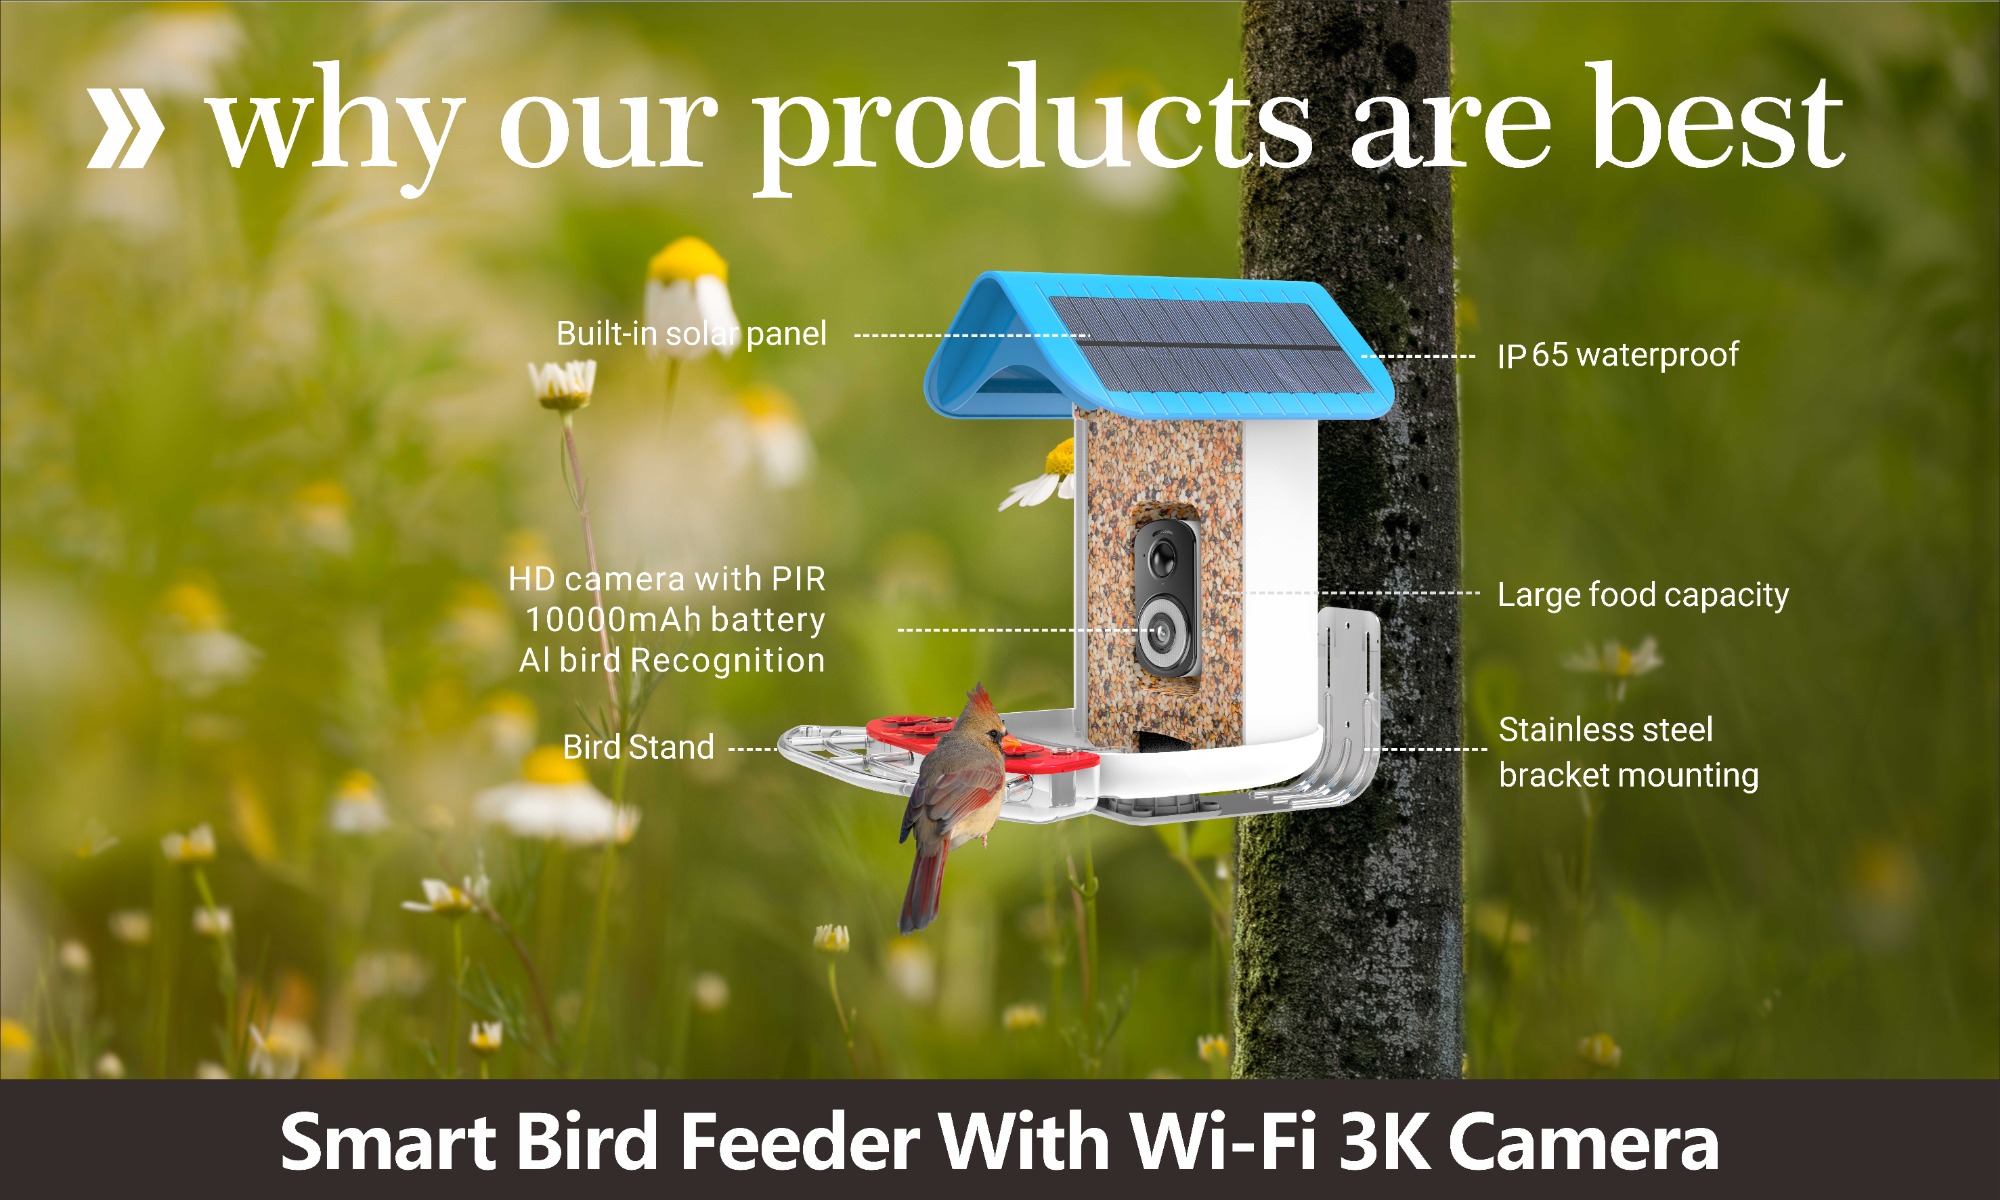 Smart Bird Feeder With Wi-Fi 3K Camera